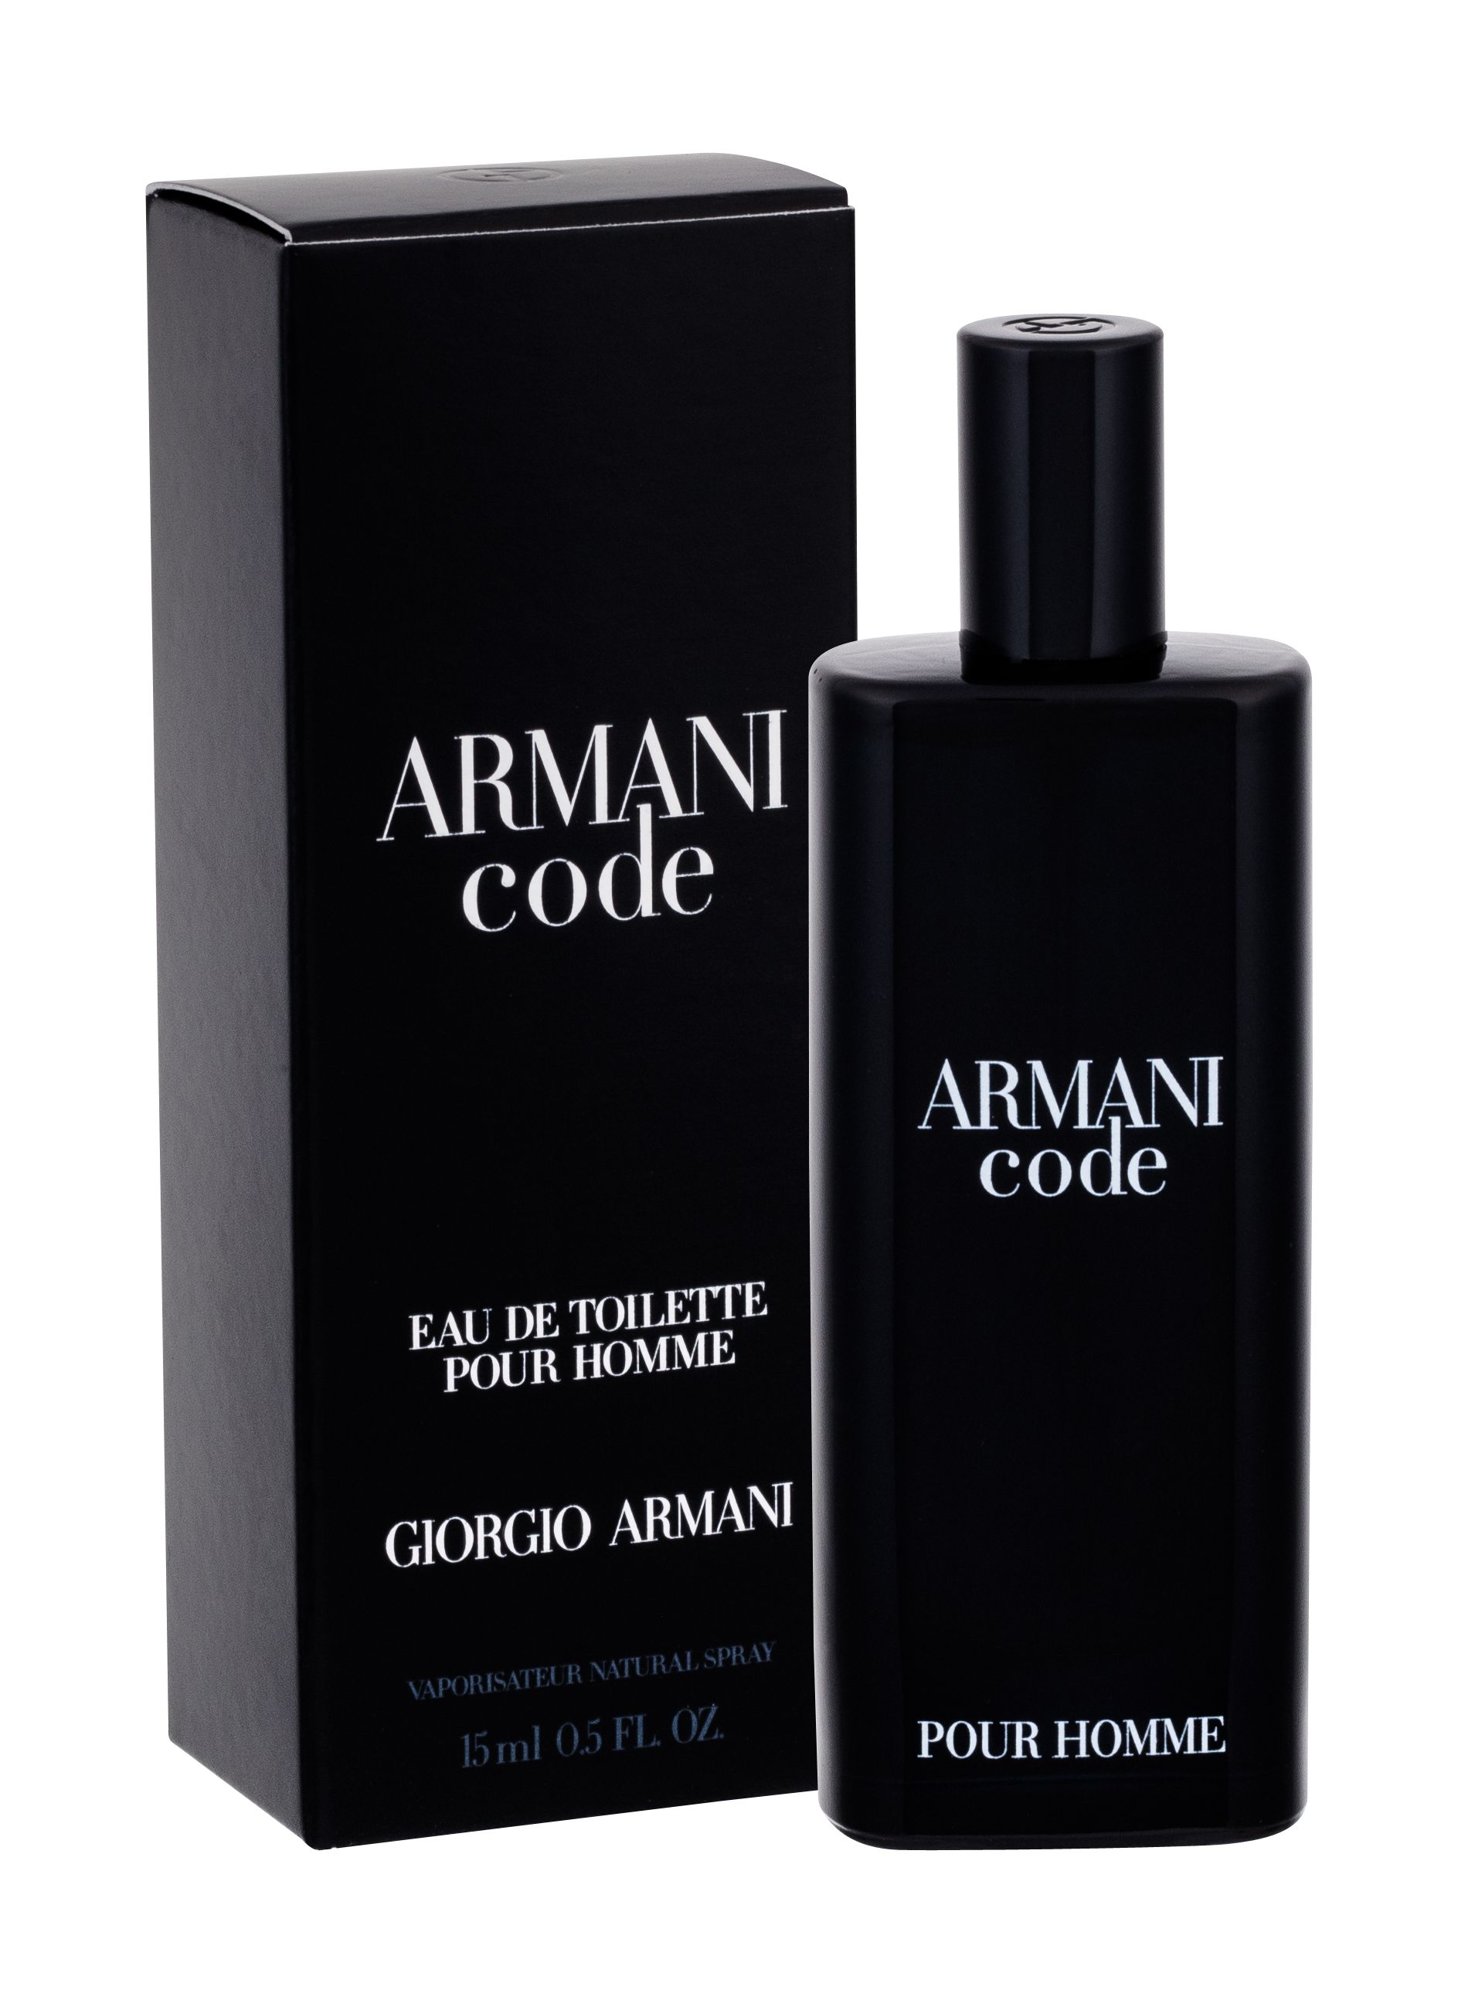 Code pour homme. Armani code EDT. Giorgio Armani туалетная вода Armani code homme. Giorgio Armani code Eau Toilette pour homme. Armani Armani code pour homme.